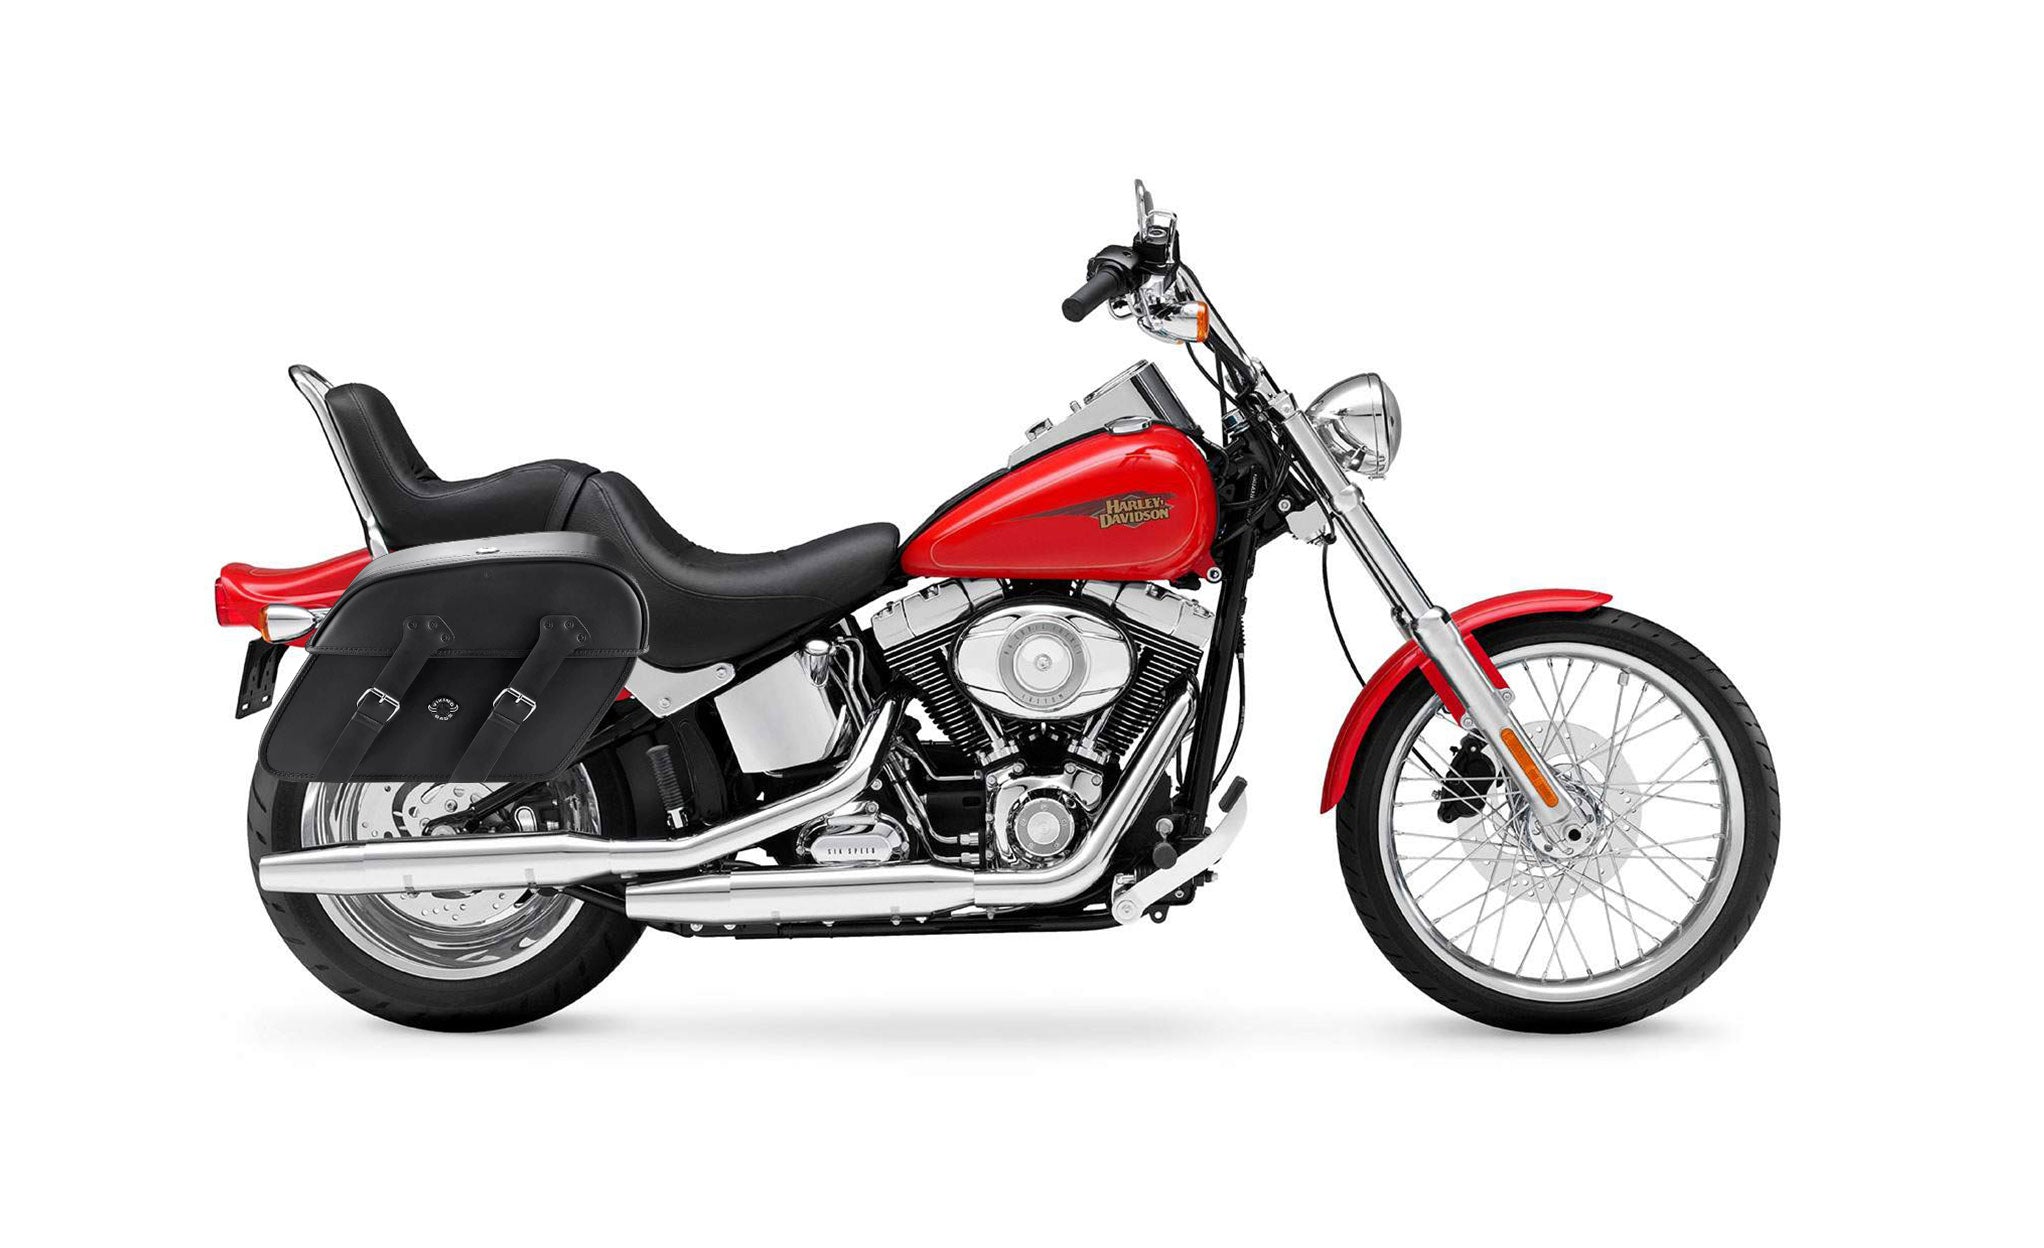 Viking Raven Extra Large Leather Motorcycle Saddlebags For Harley Softail Custom Fxstc on Bike Photo @expand